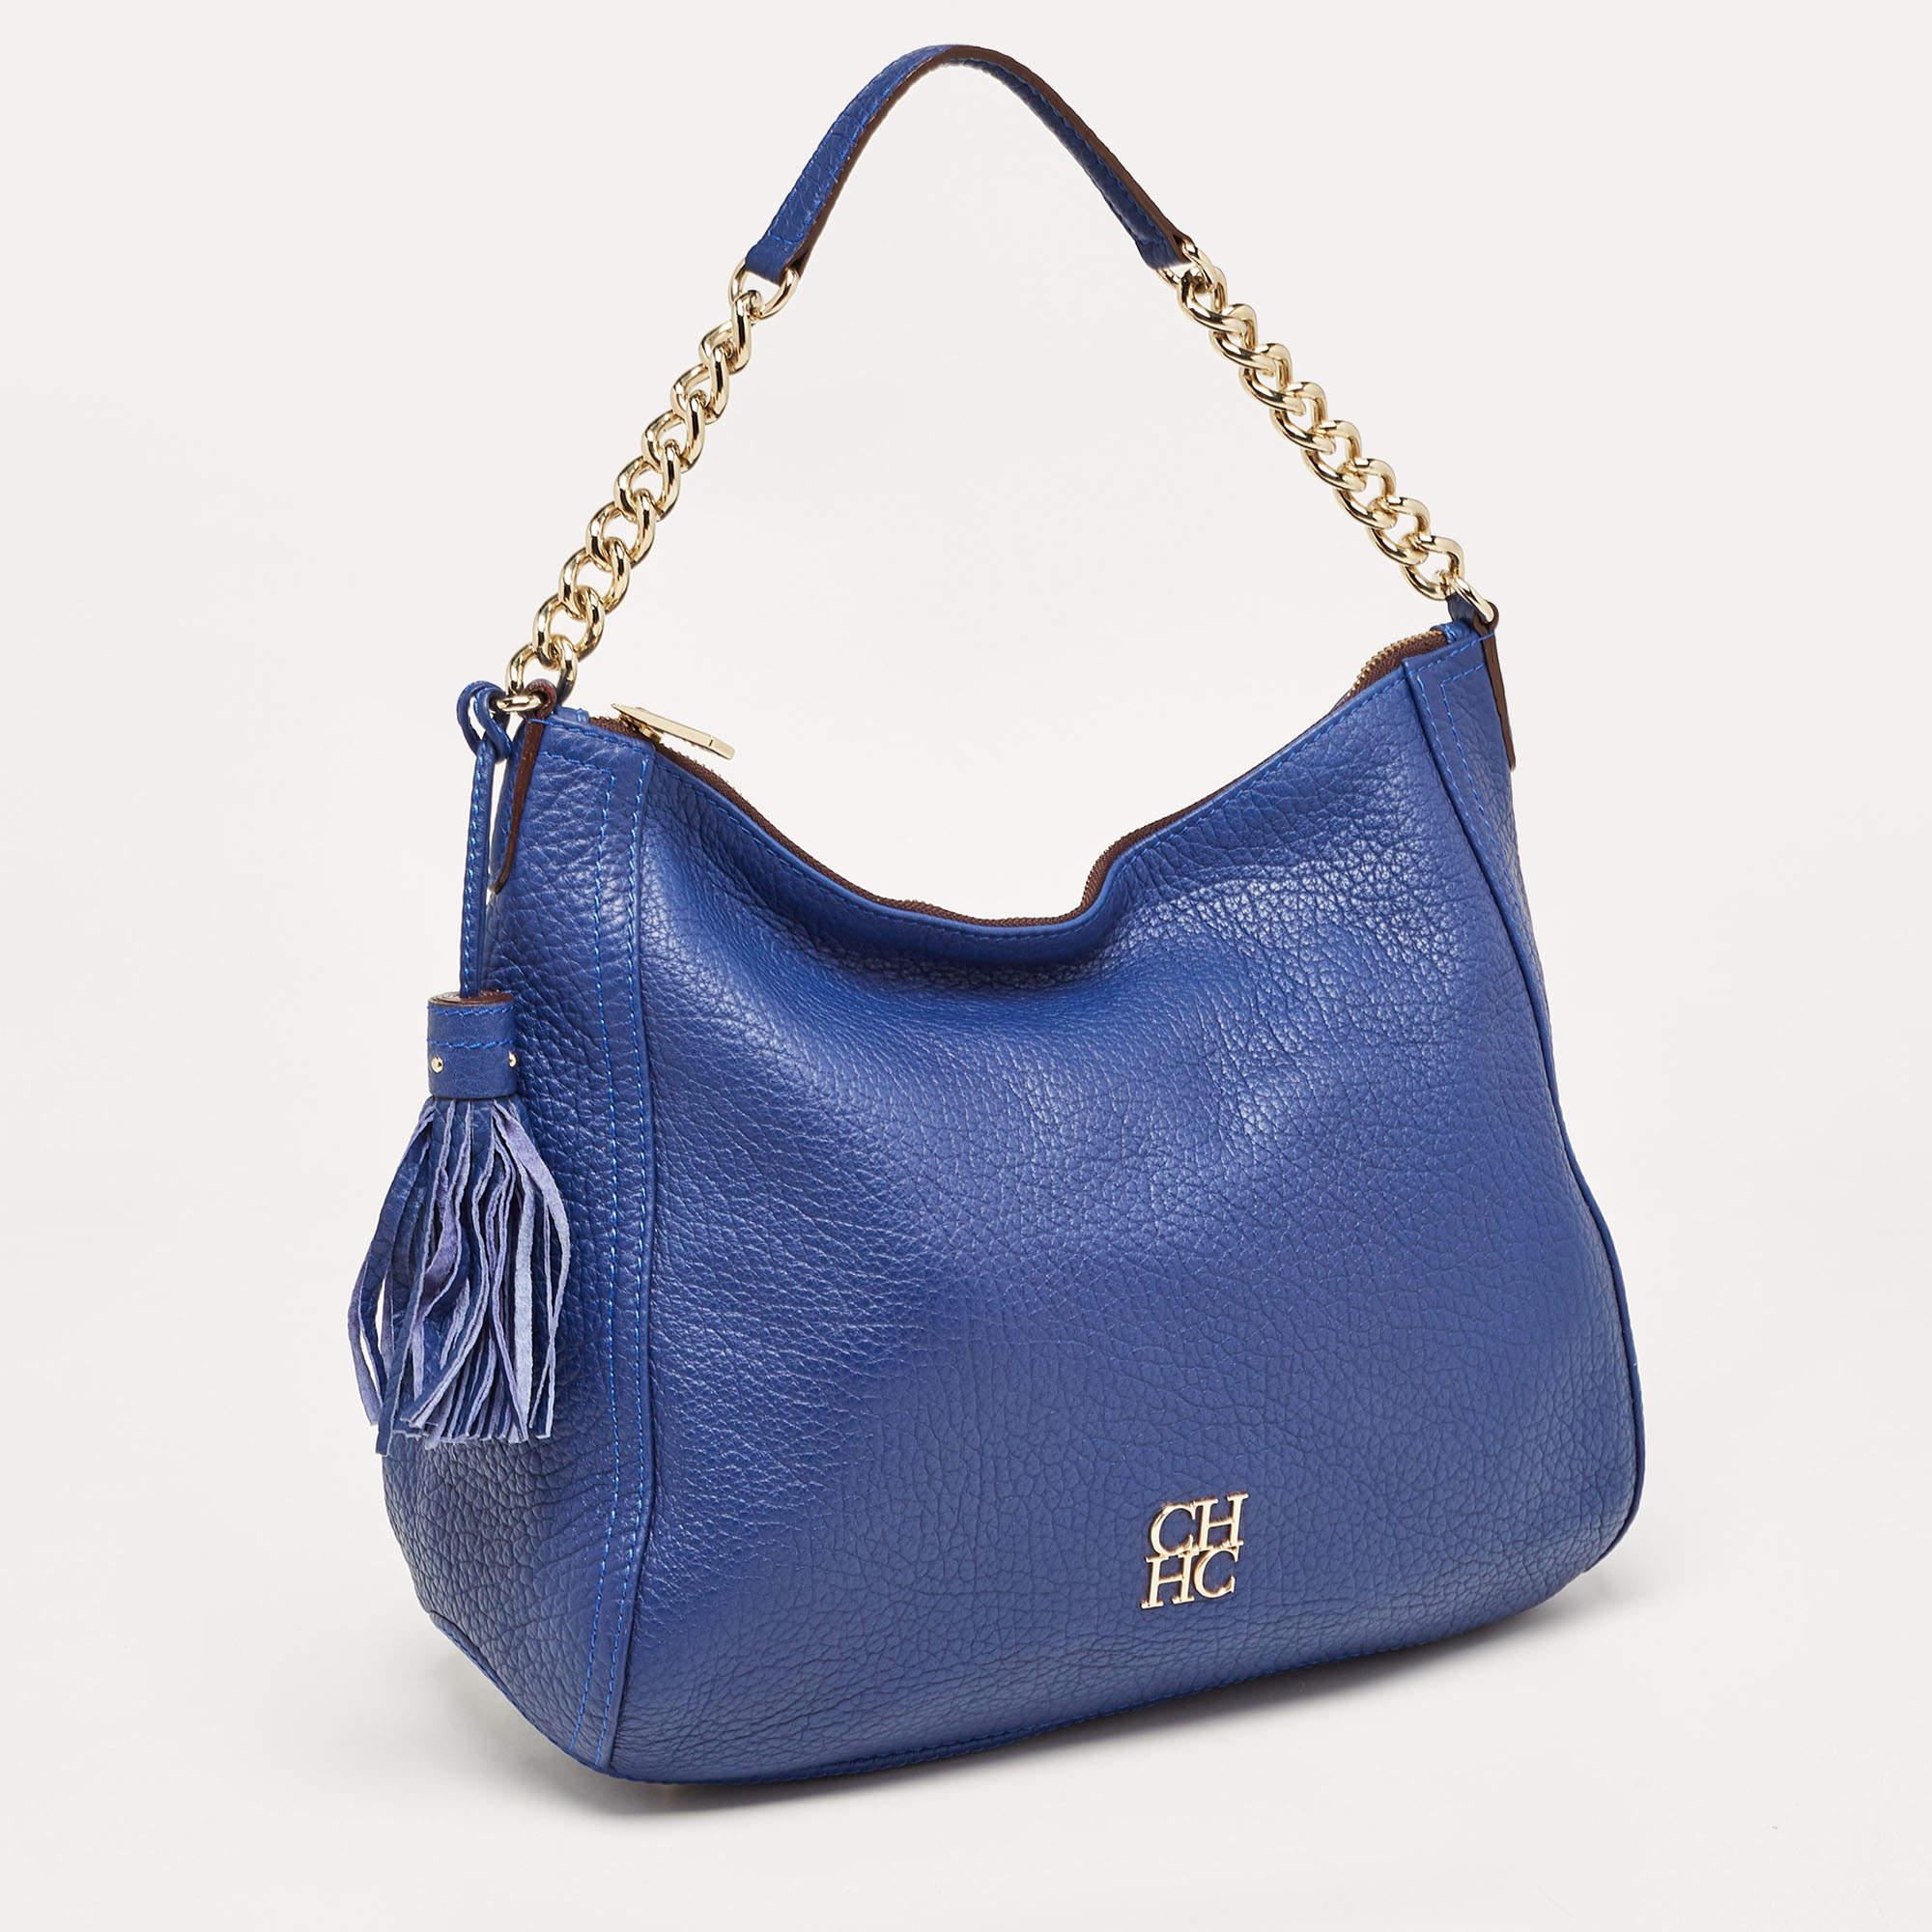 Carolina Herrera Blue Leather Chain Tassel Hobo For Sale 5